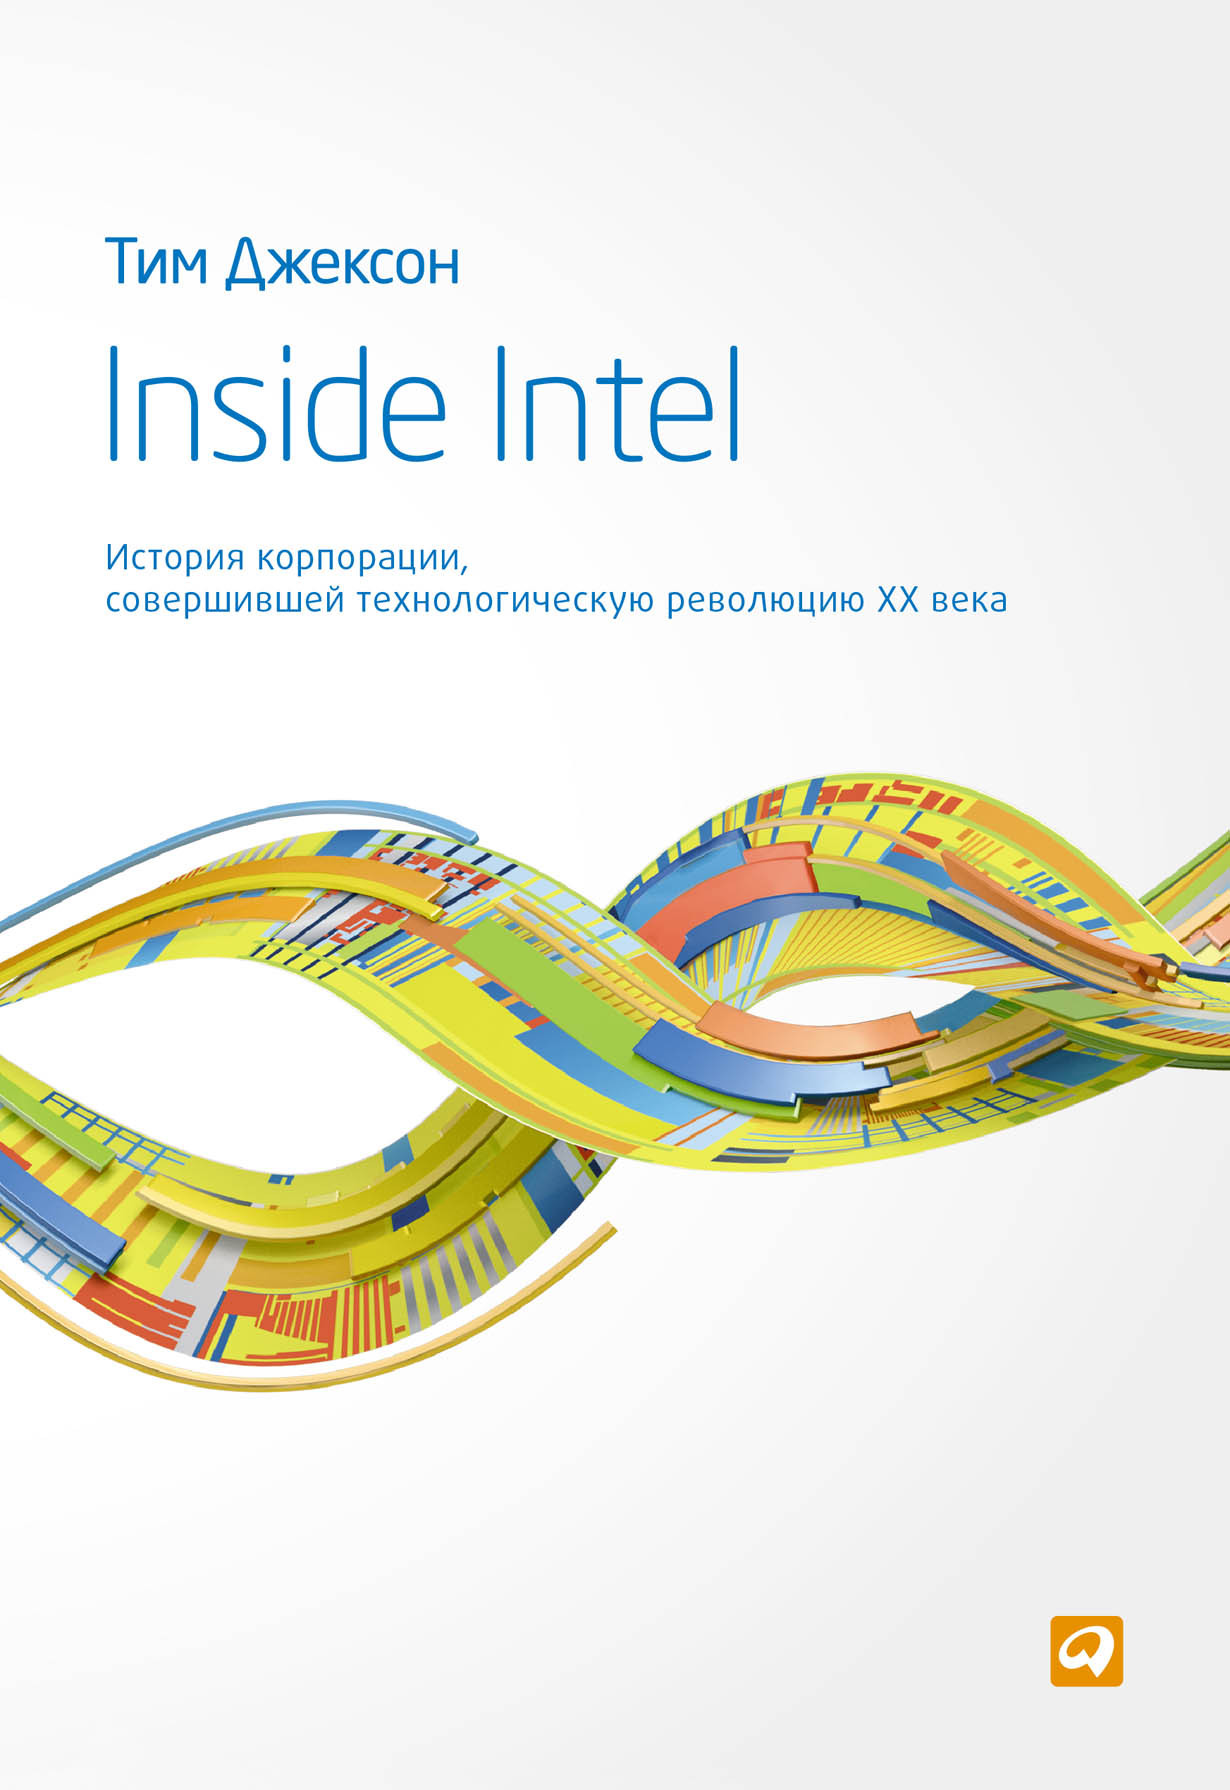 Inside Intel обложка.